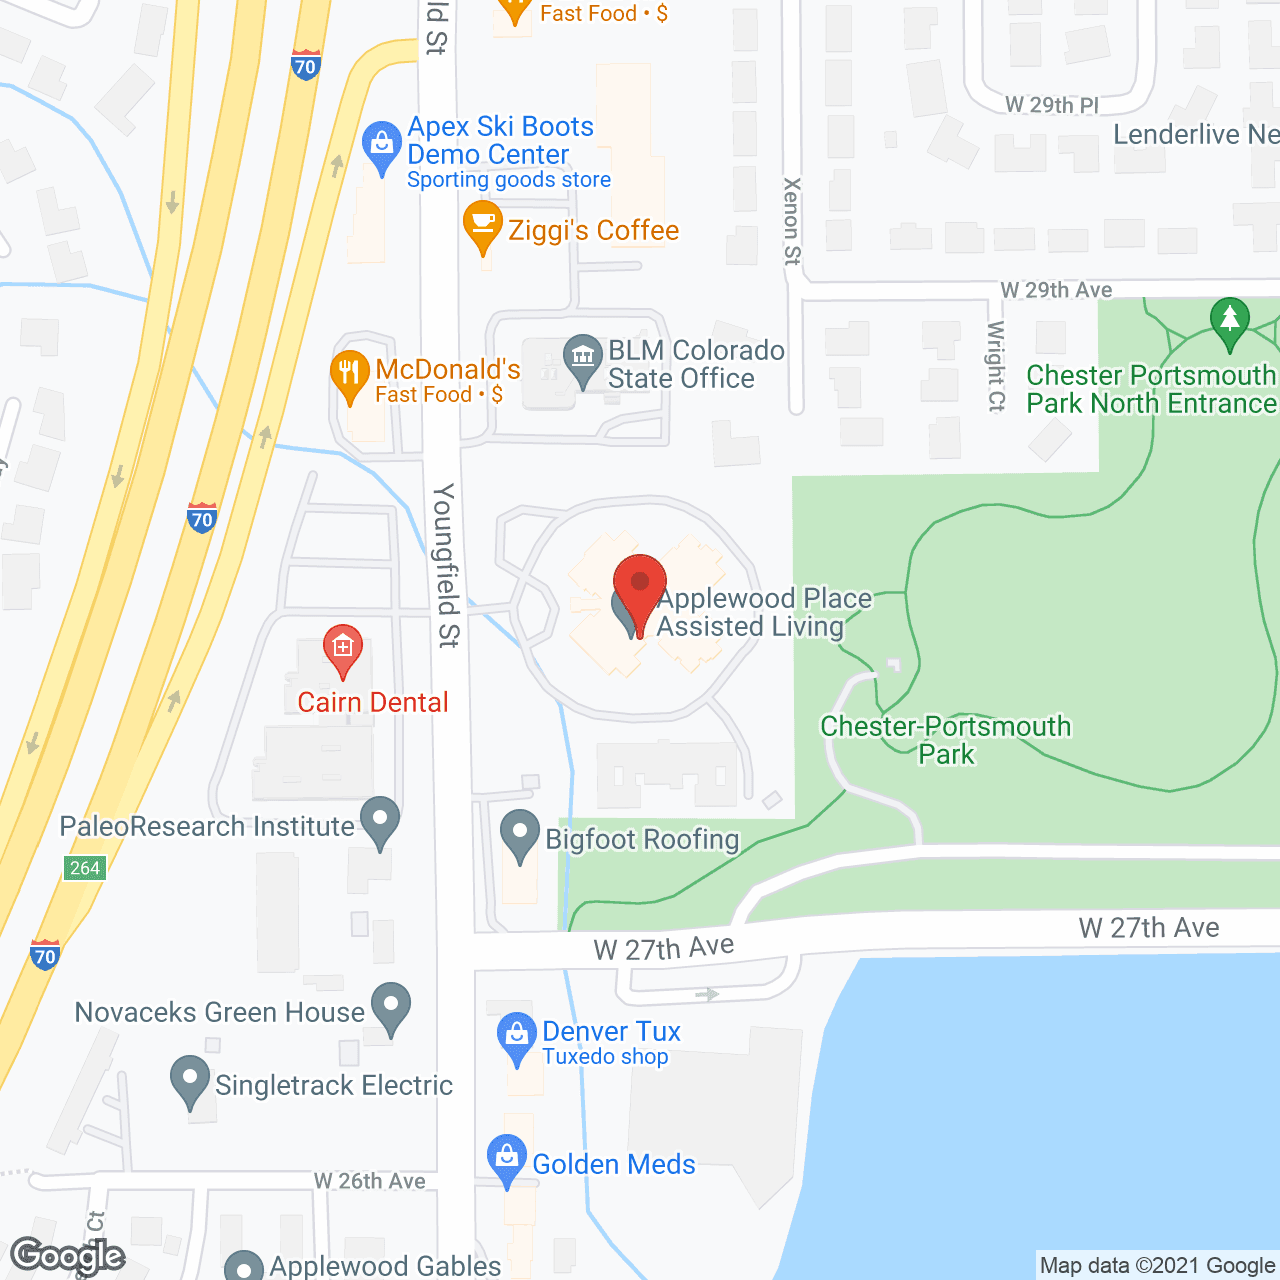 MorningStar at Applewood in google map